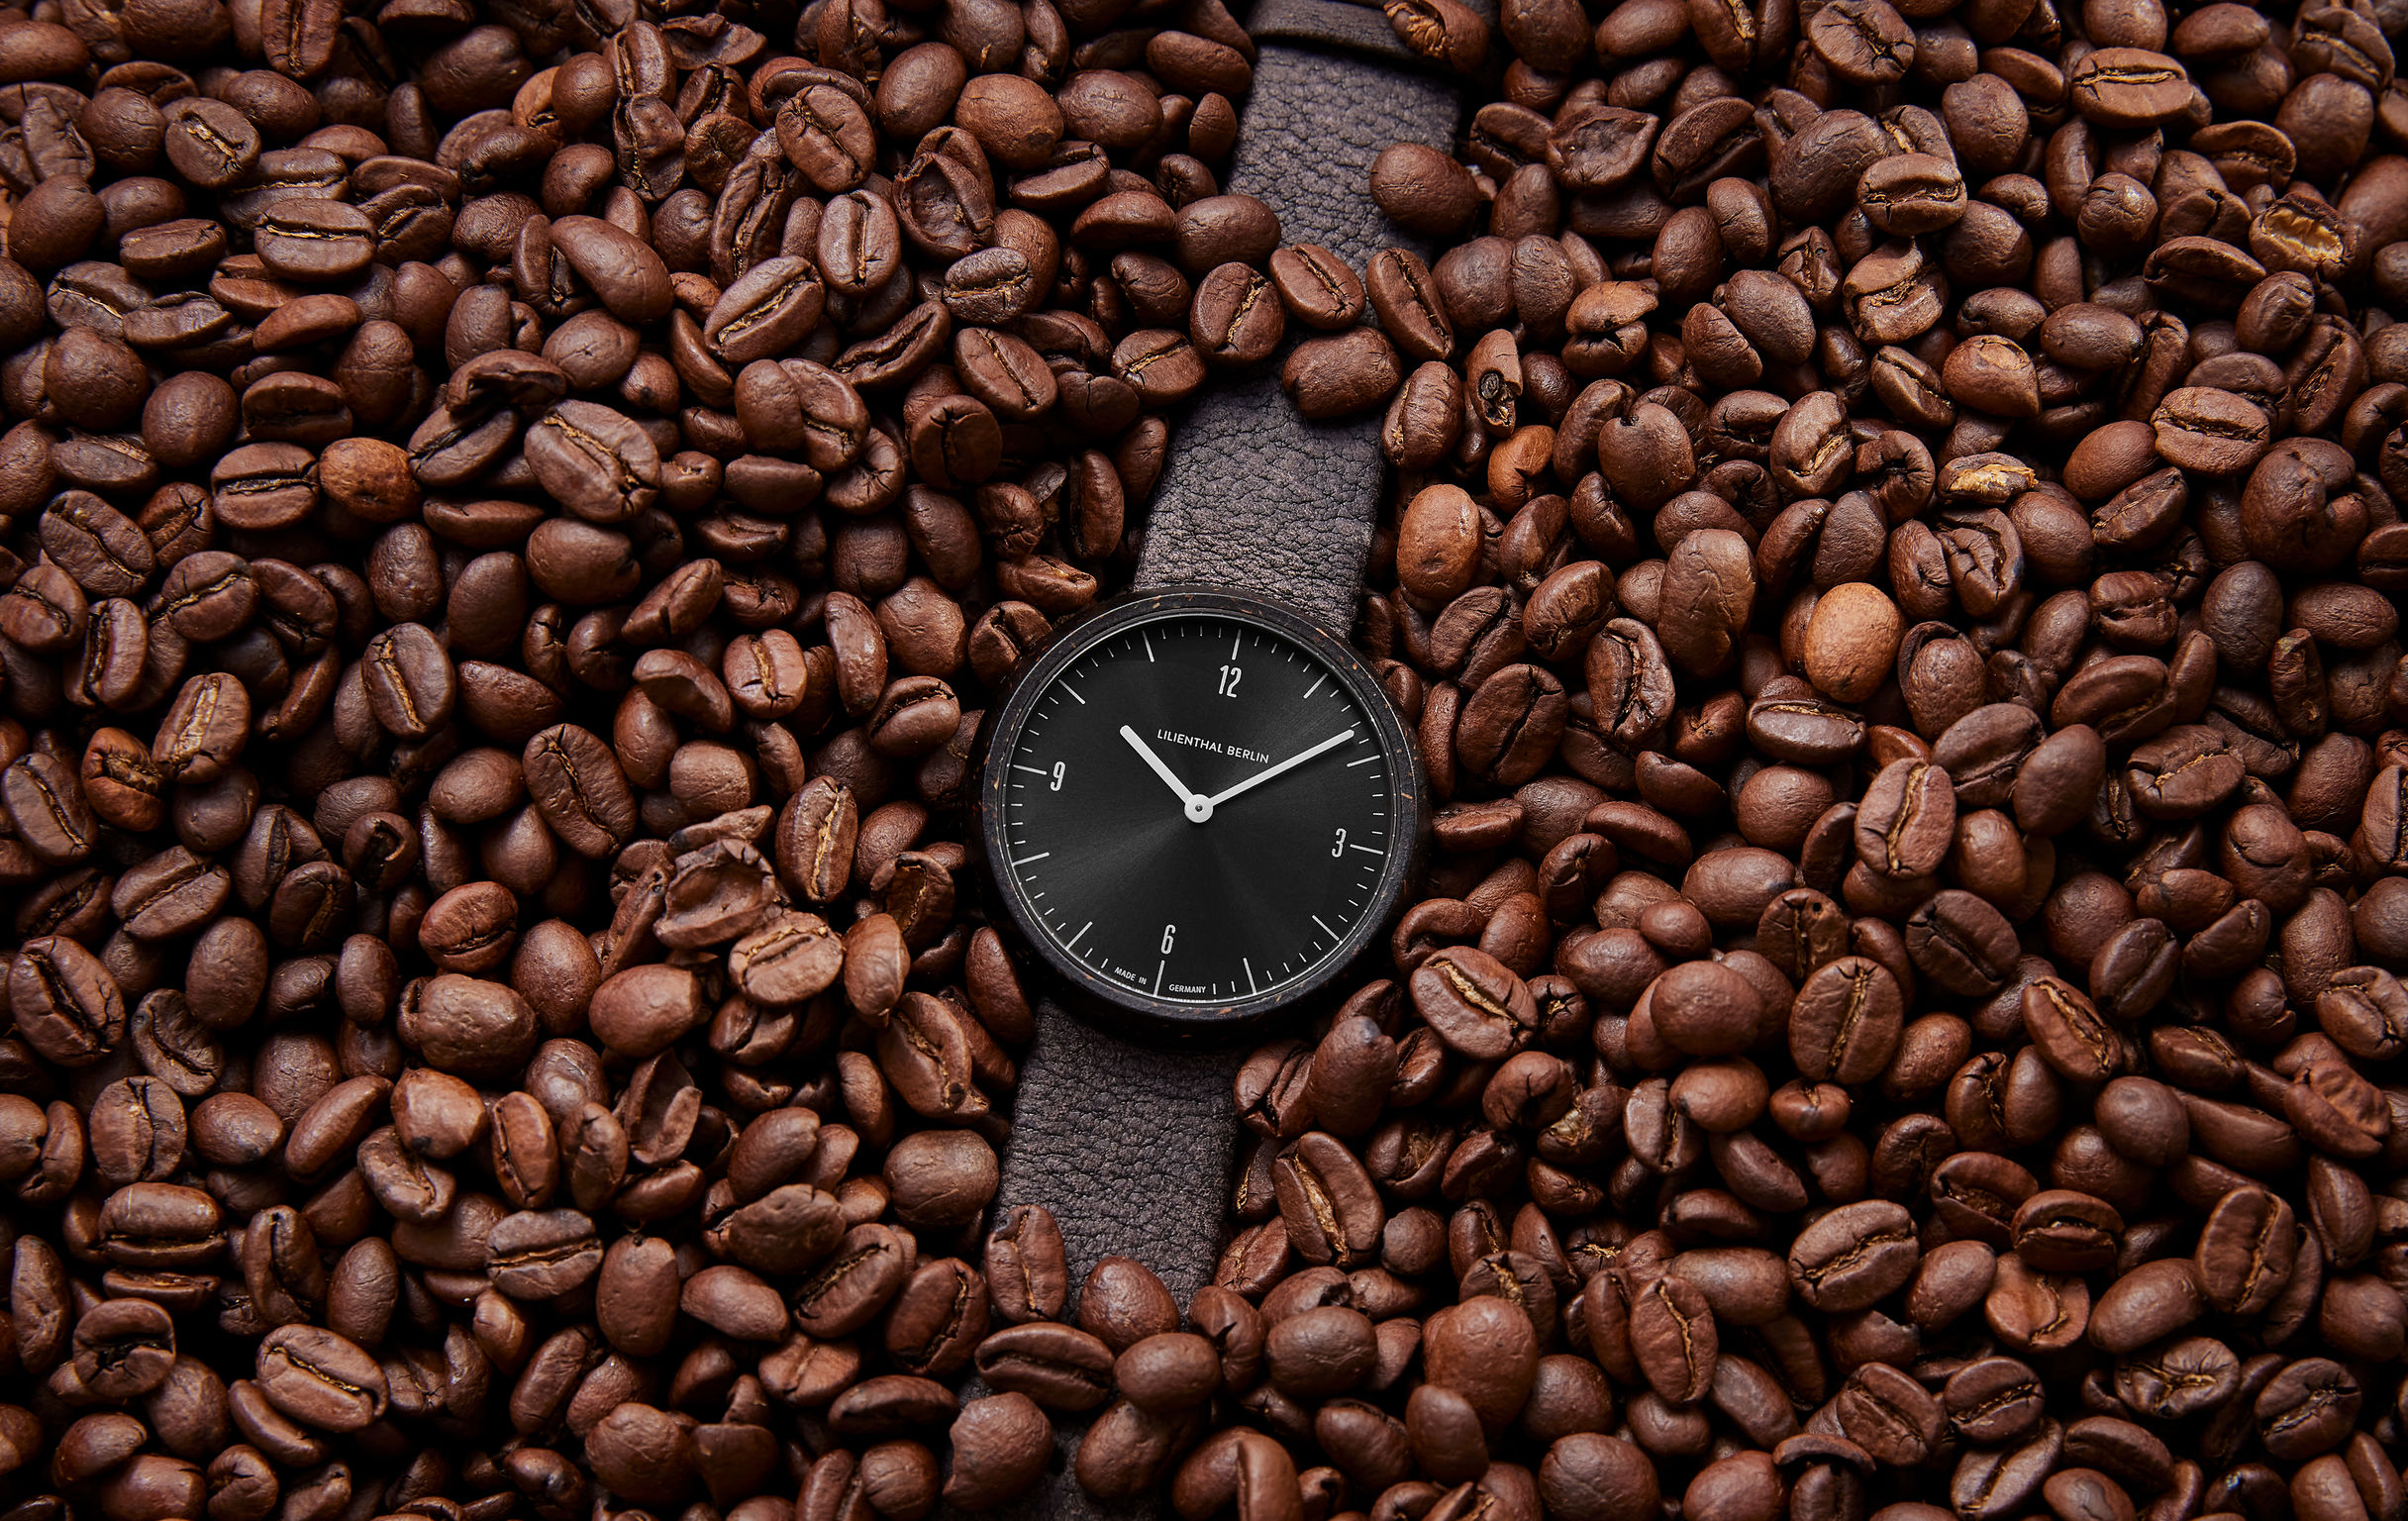 The Coffee Watch